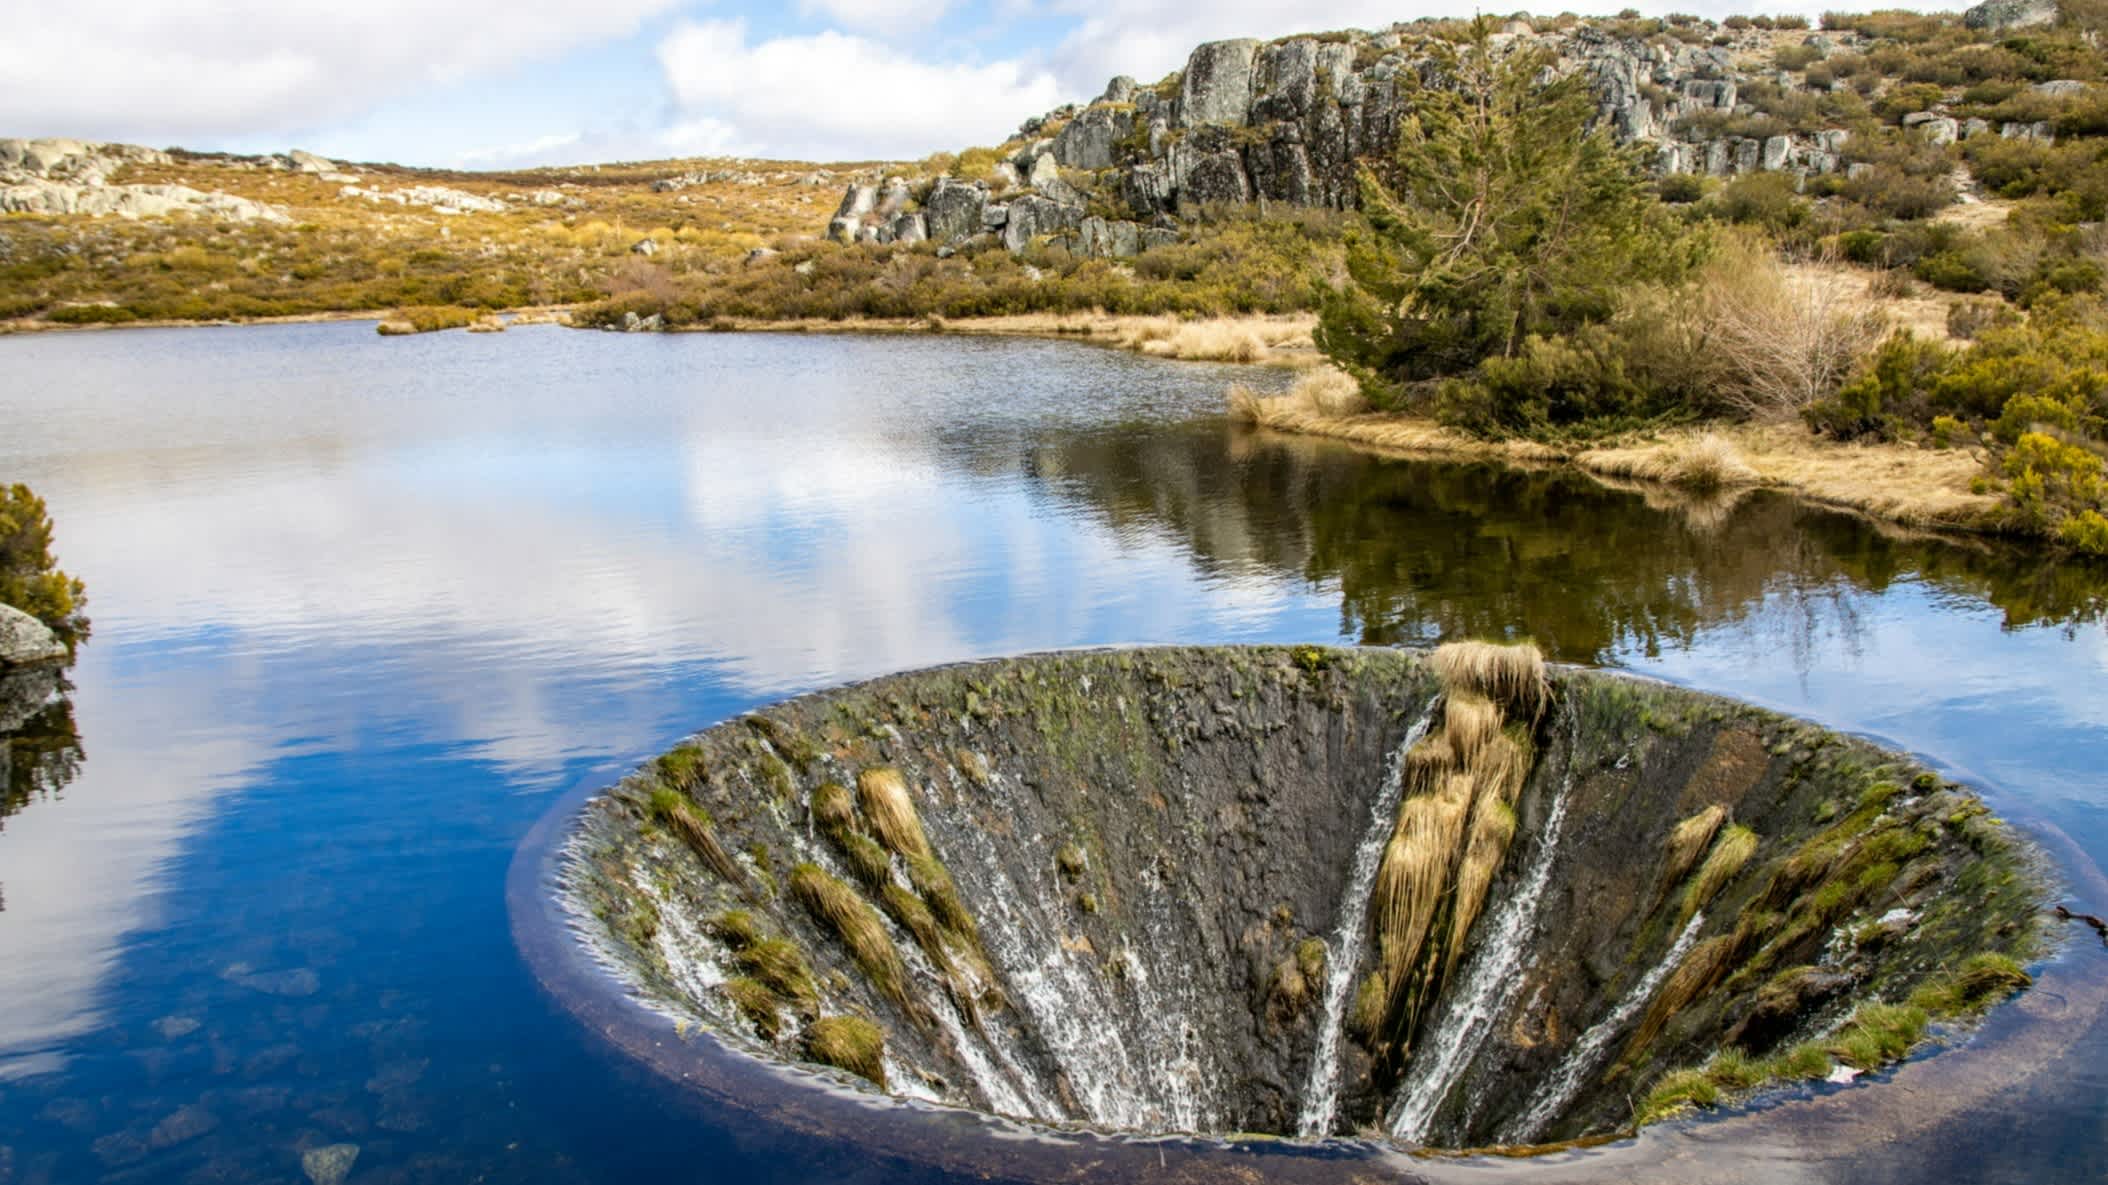 Covao Dos Conchos - Ein Loch in der Mitte des Sees in Serra da Estrela, Portugal